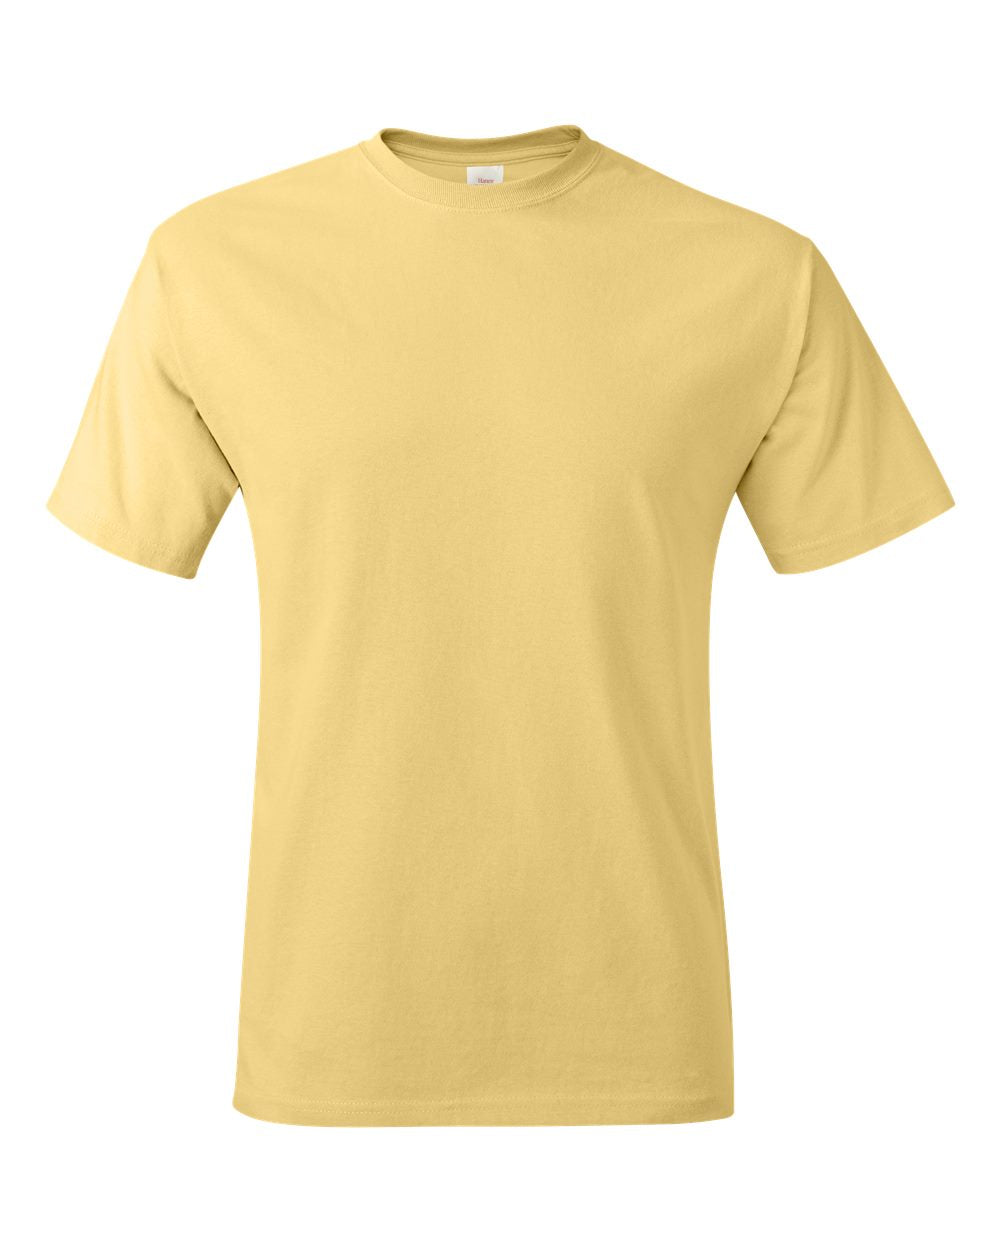 Cape Dory T-Shirt